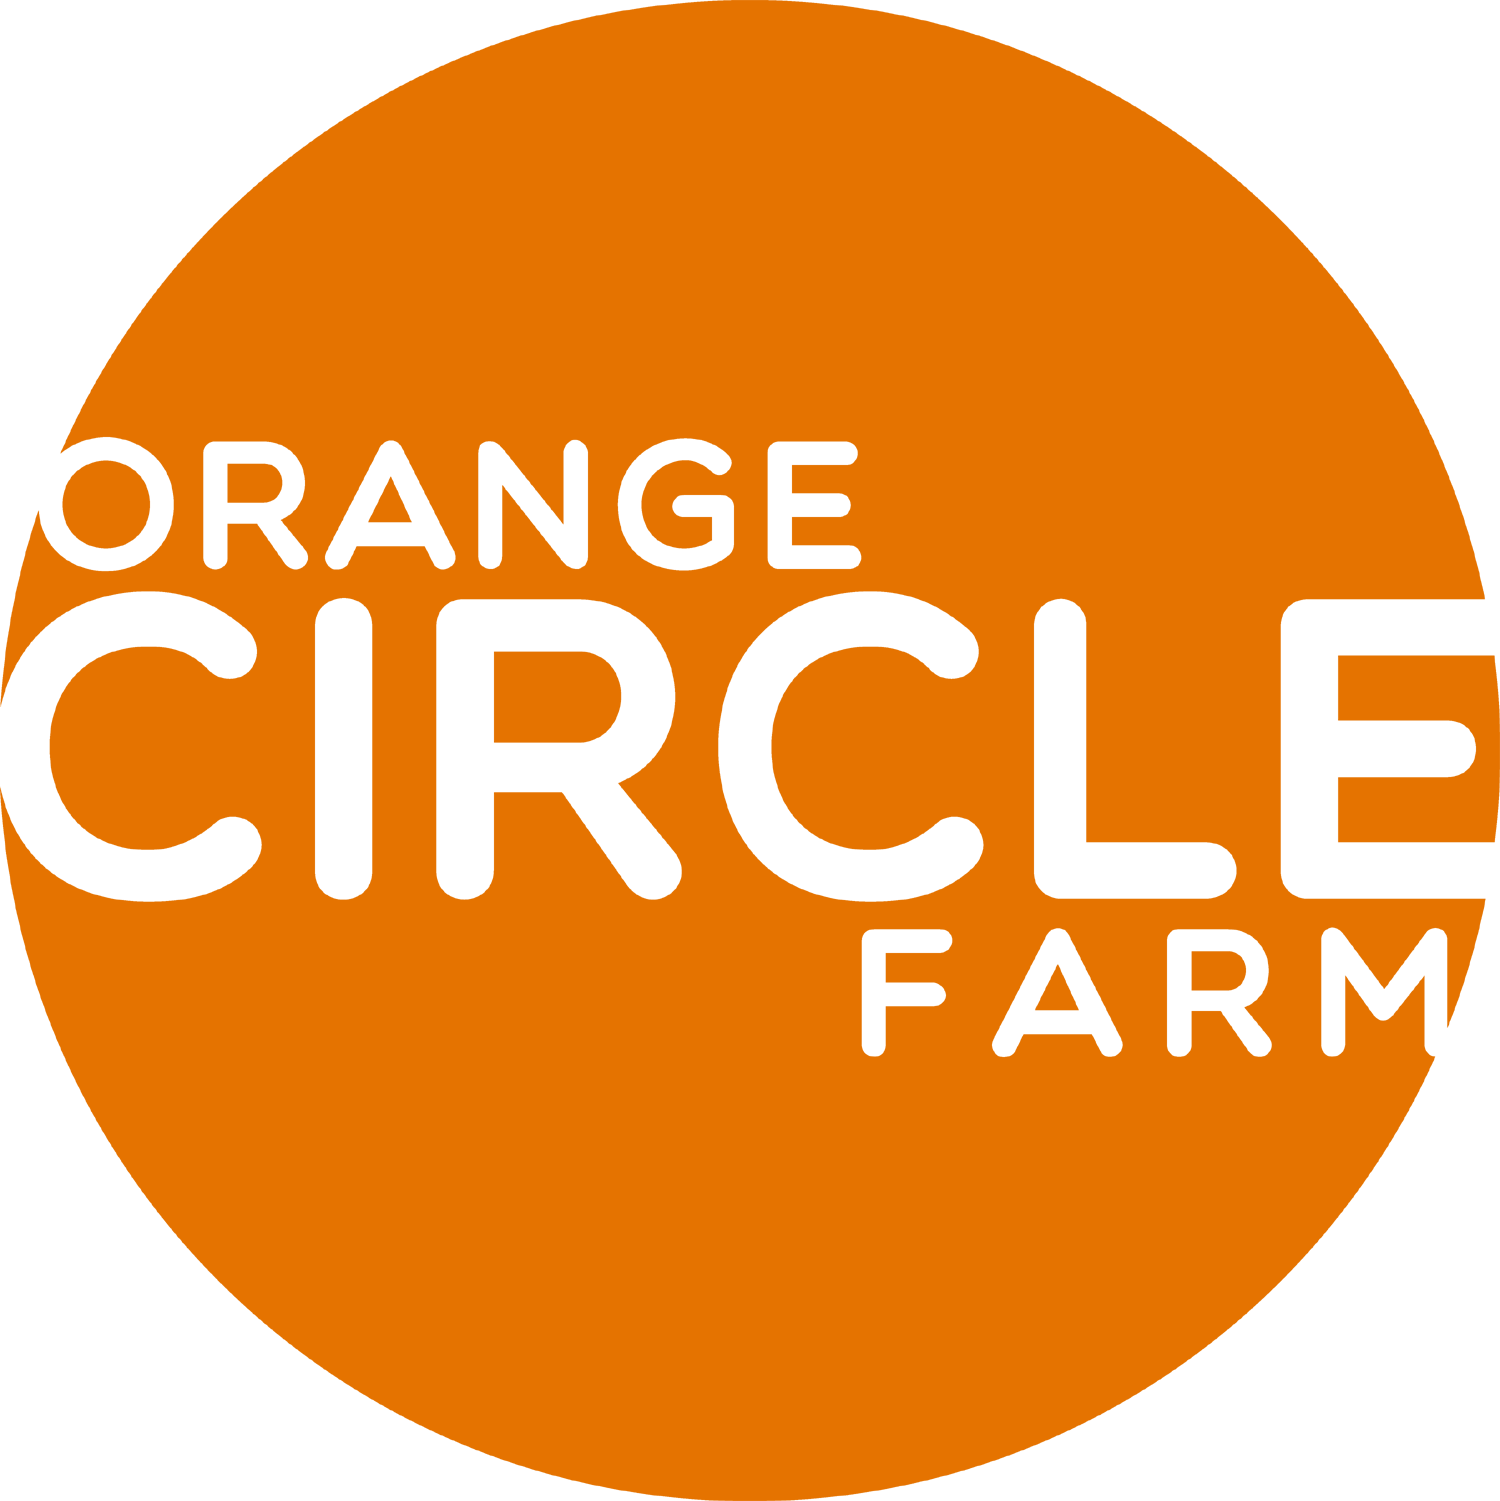 Orange Circle Farm